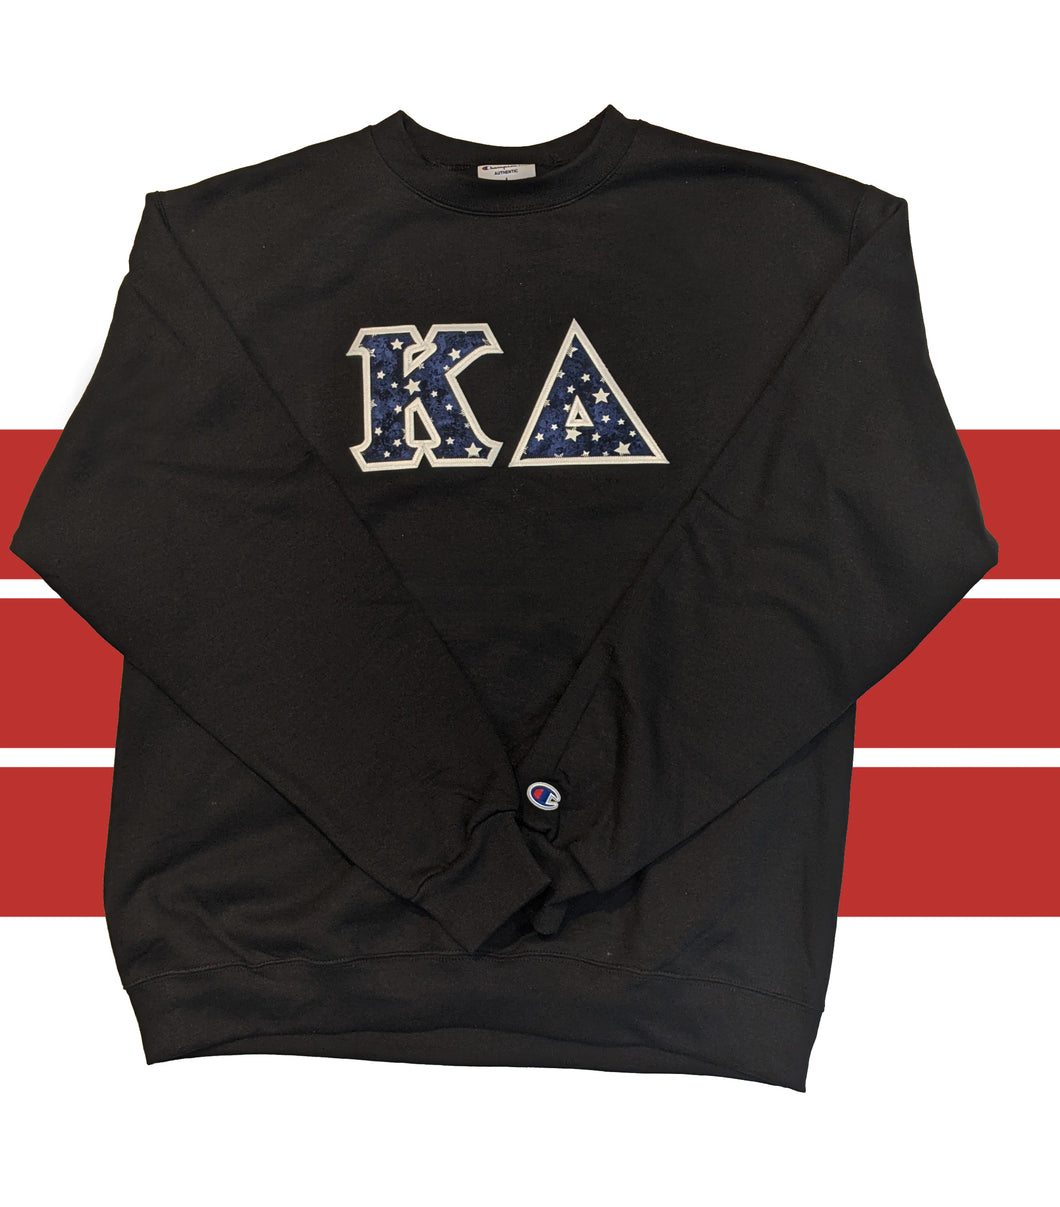 Kappa Delta Sorority Sweatshirt With Navy & White Stars Stitch Letters